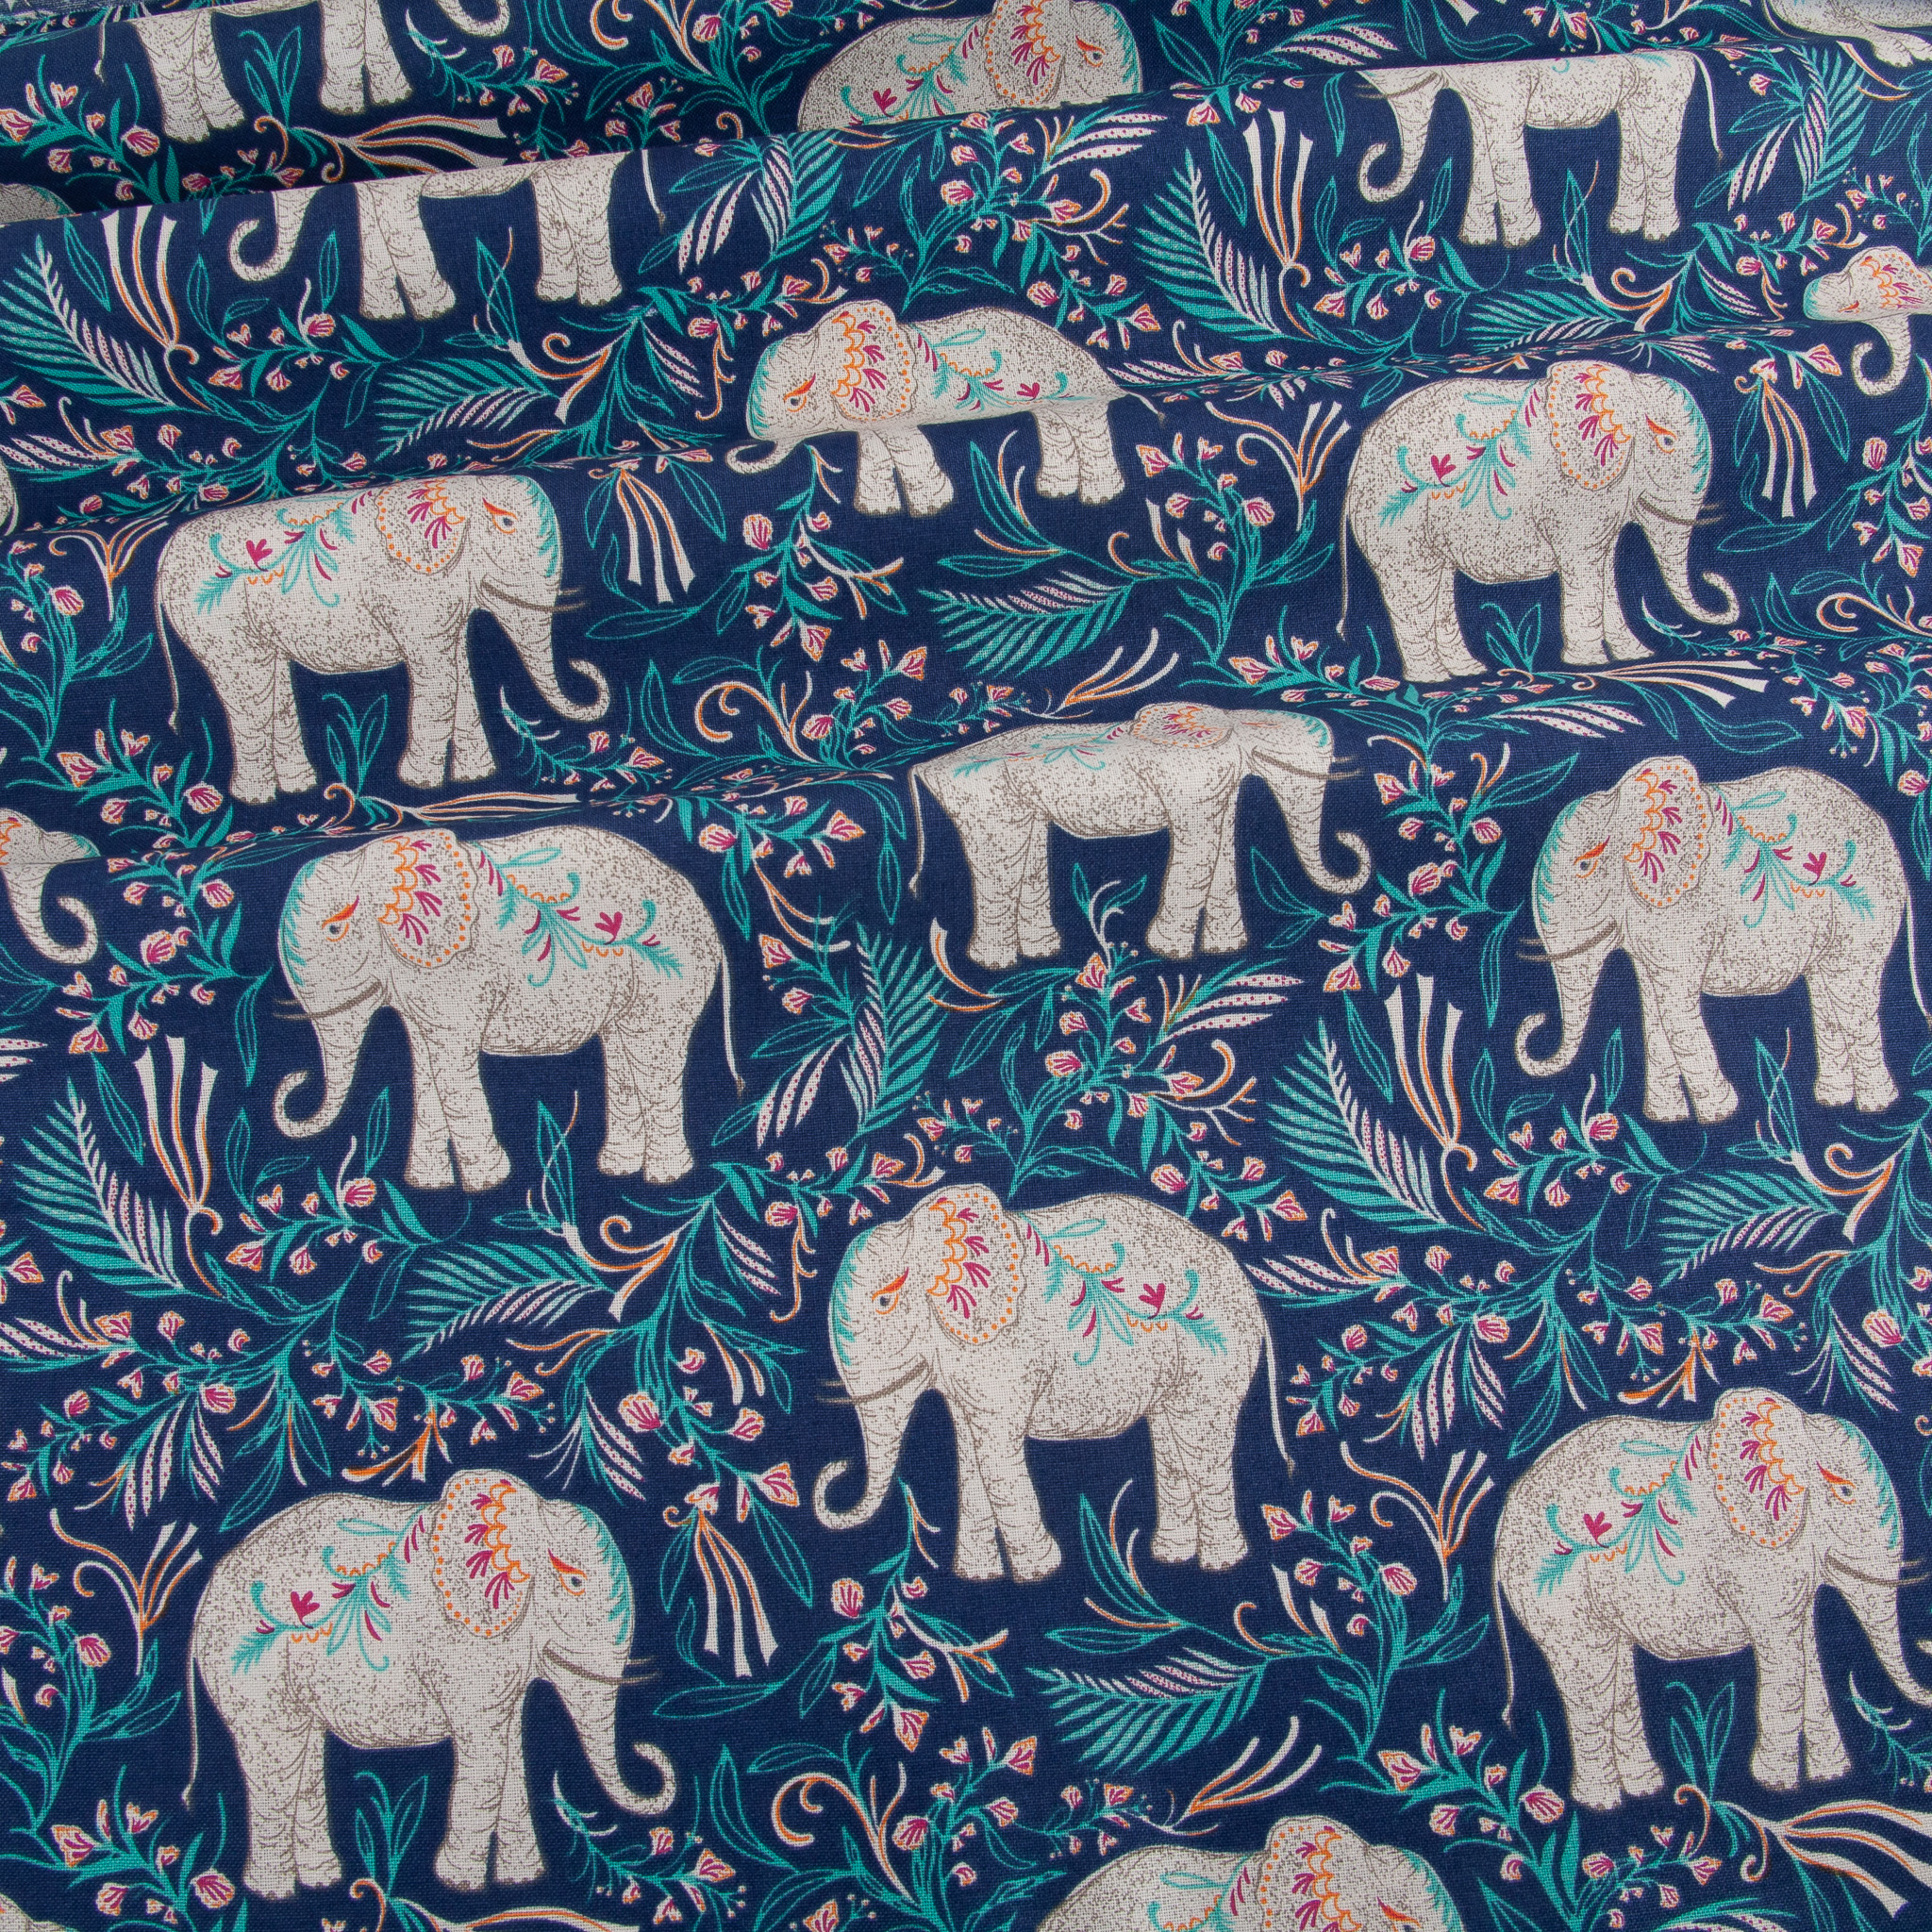 Spirit of Africa - Decorative Elephant Blue – Debbie Shore Sewing